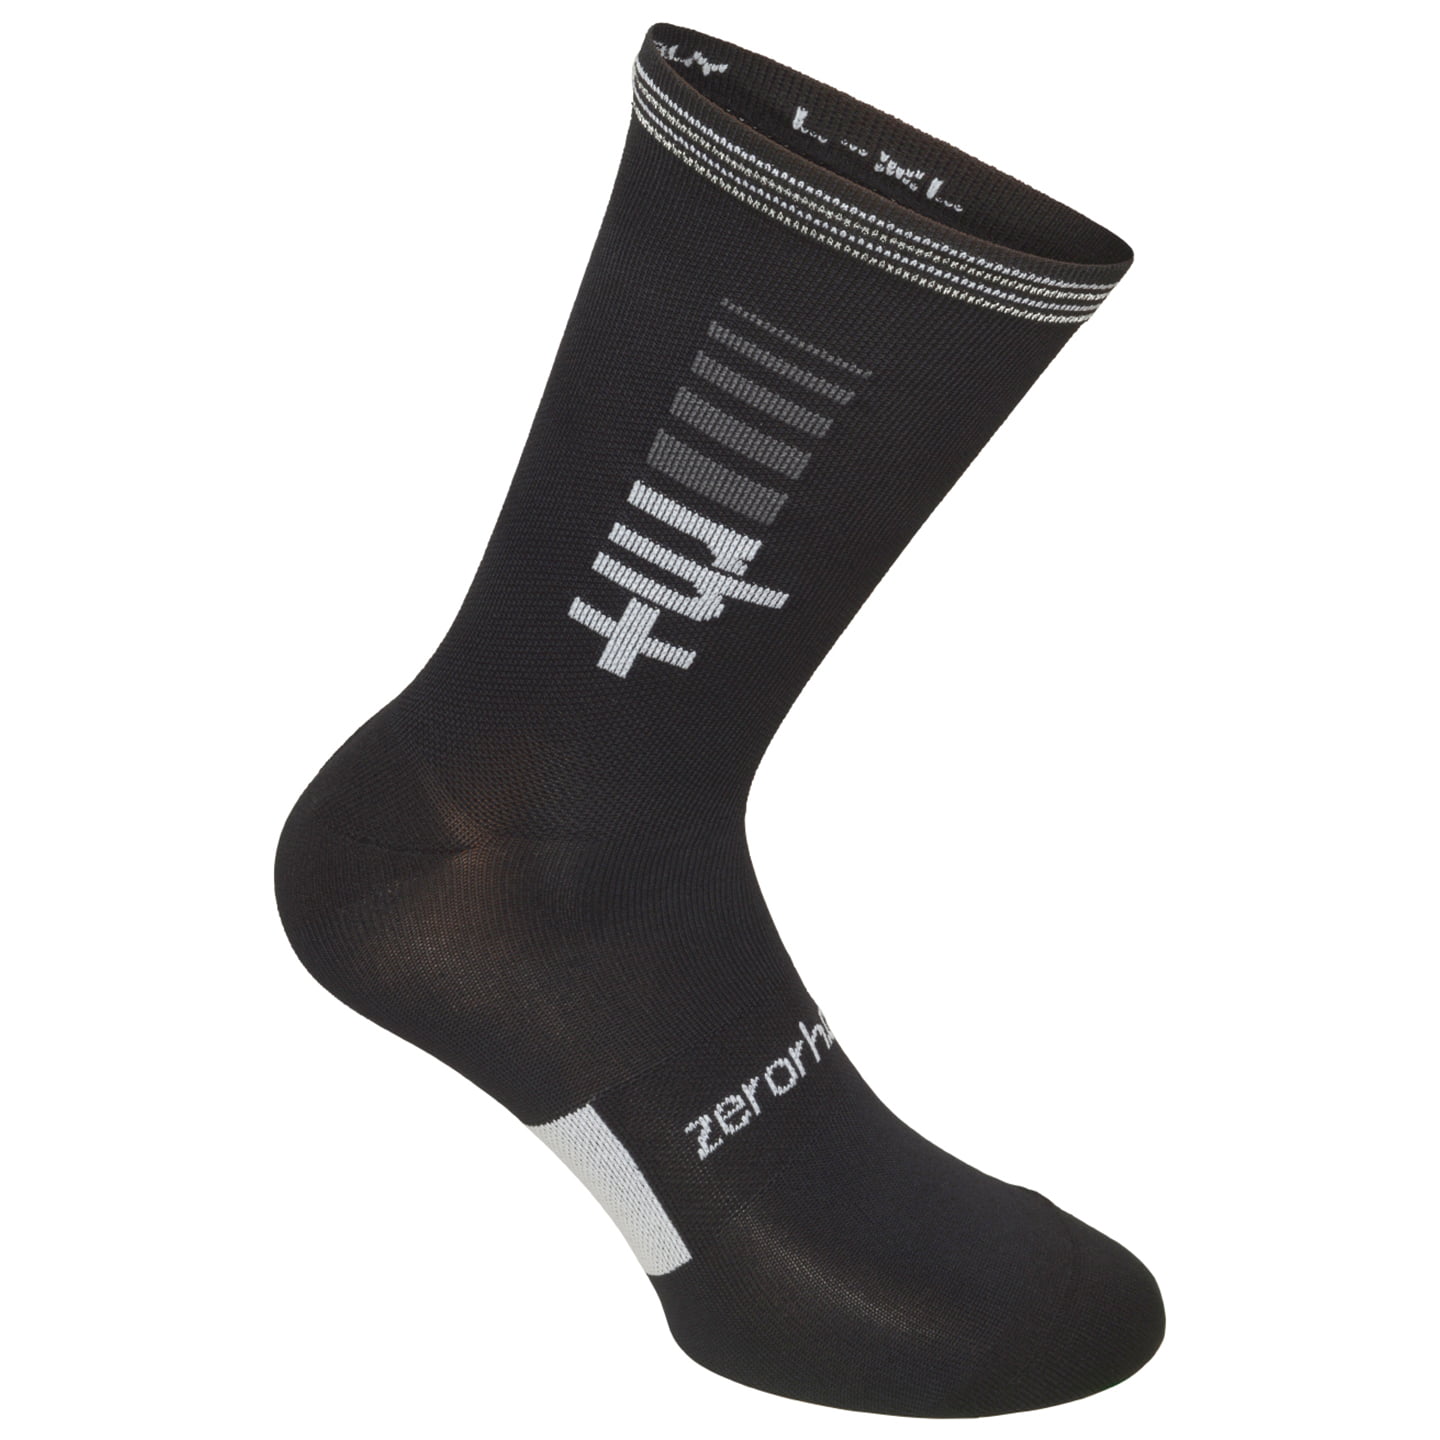 rh+ Logo 20 Cycling Socks Cycling Socks, for men, size S-M, MTB socks, Cycling clothing